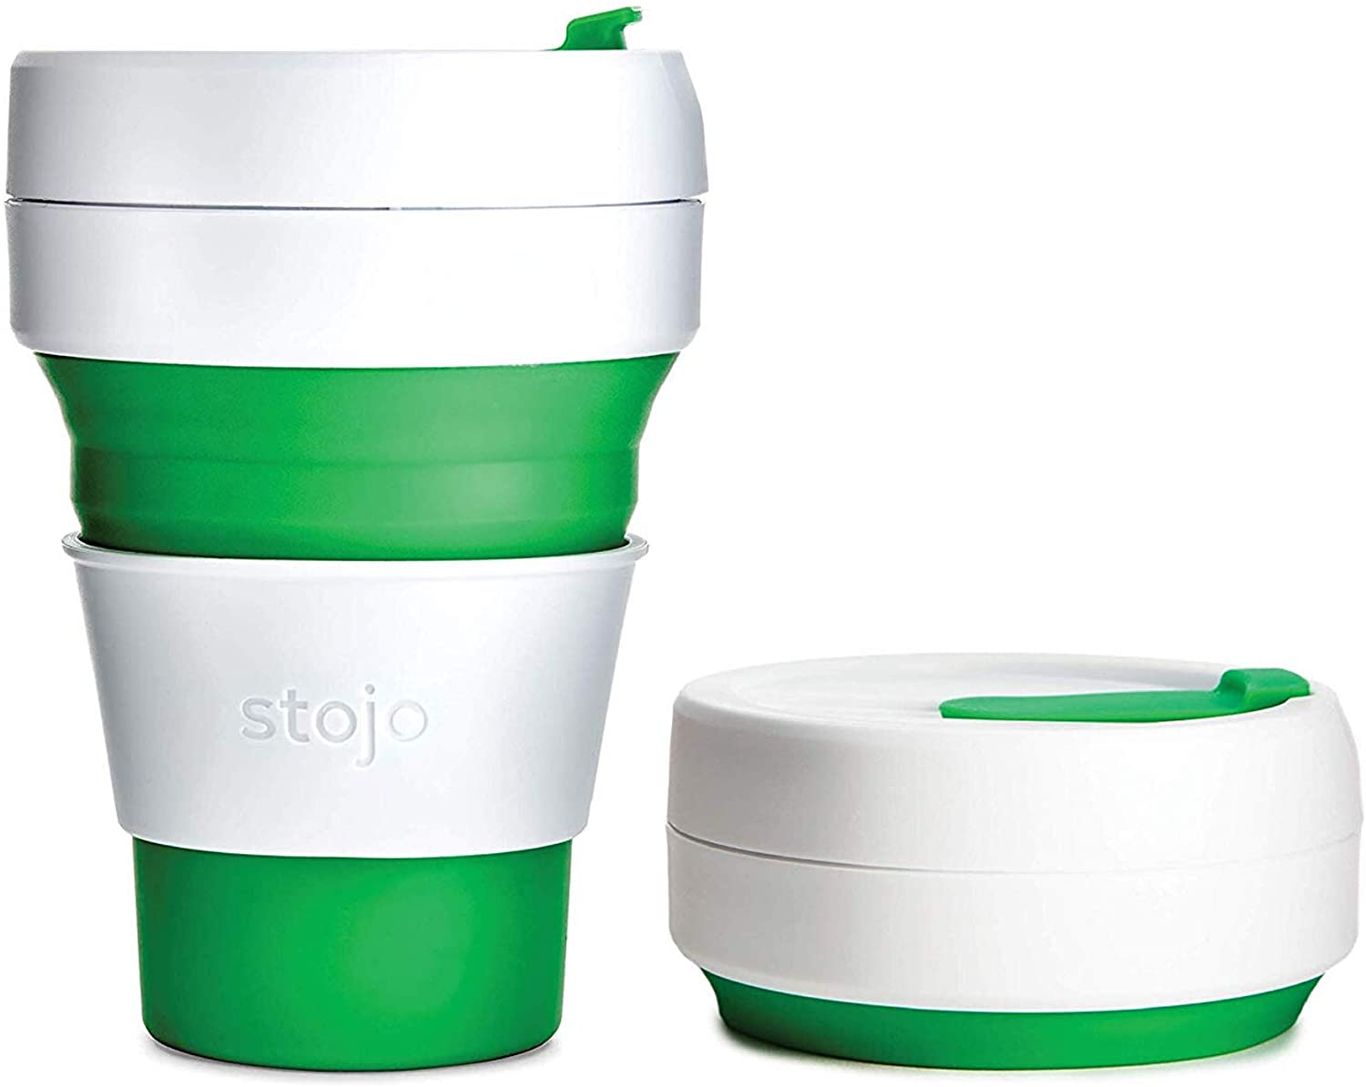 Best travel coffee mug 10 toprated travel mugs to keep your coffee